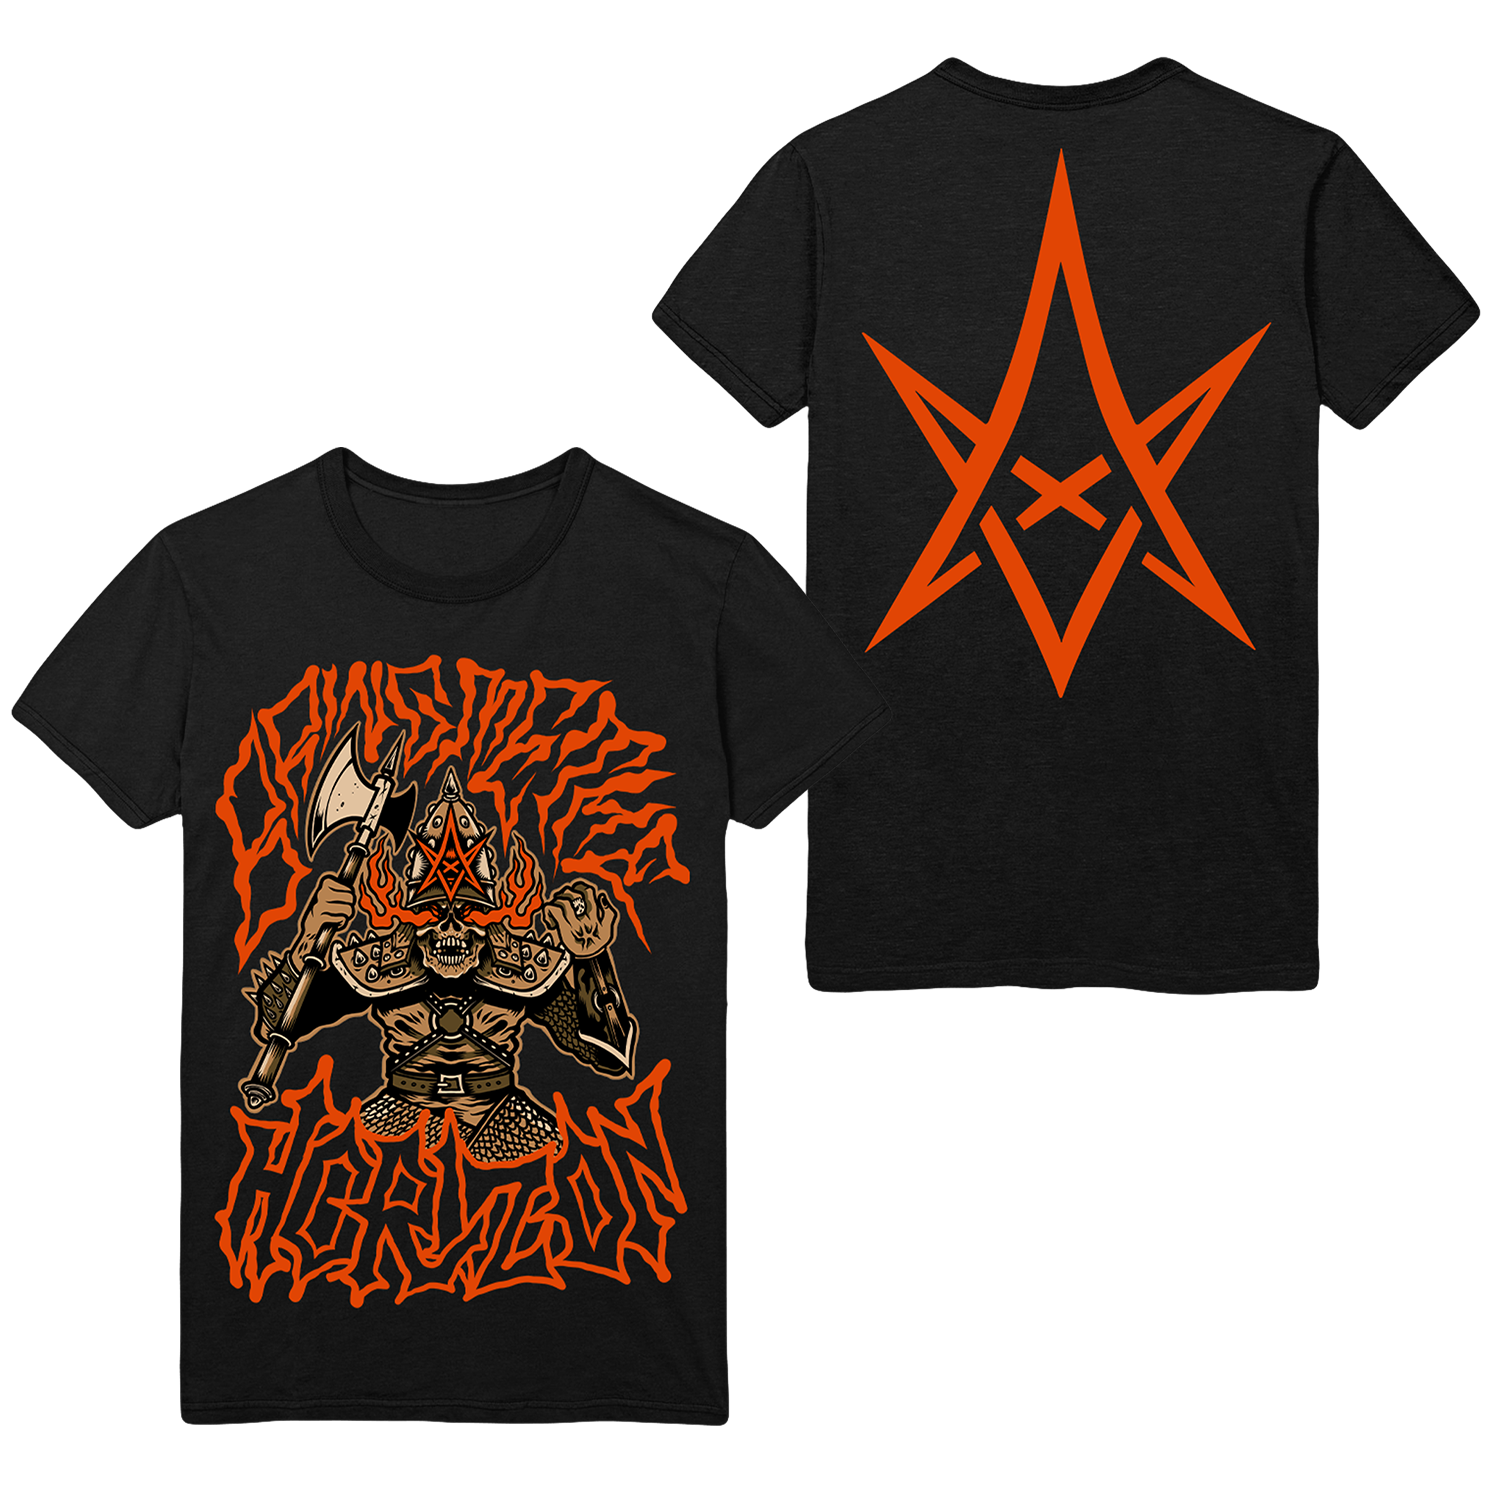 Doomed - Bring Me The Horizon Essential T-Shirt by deadartist17